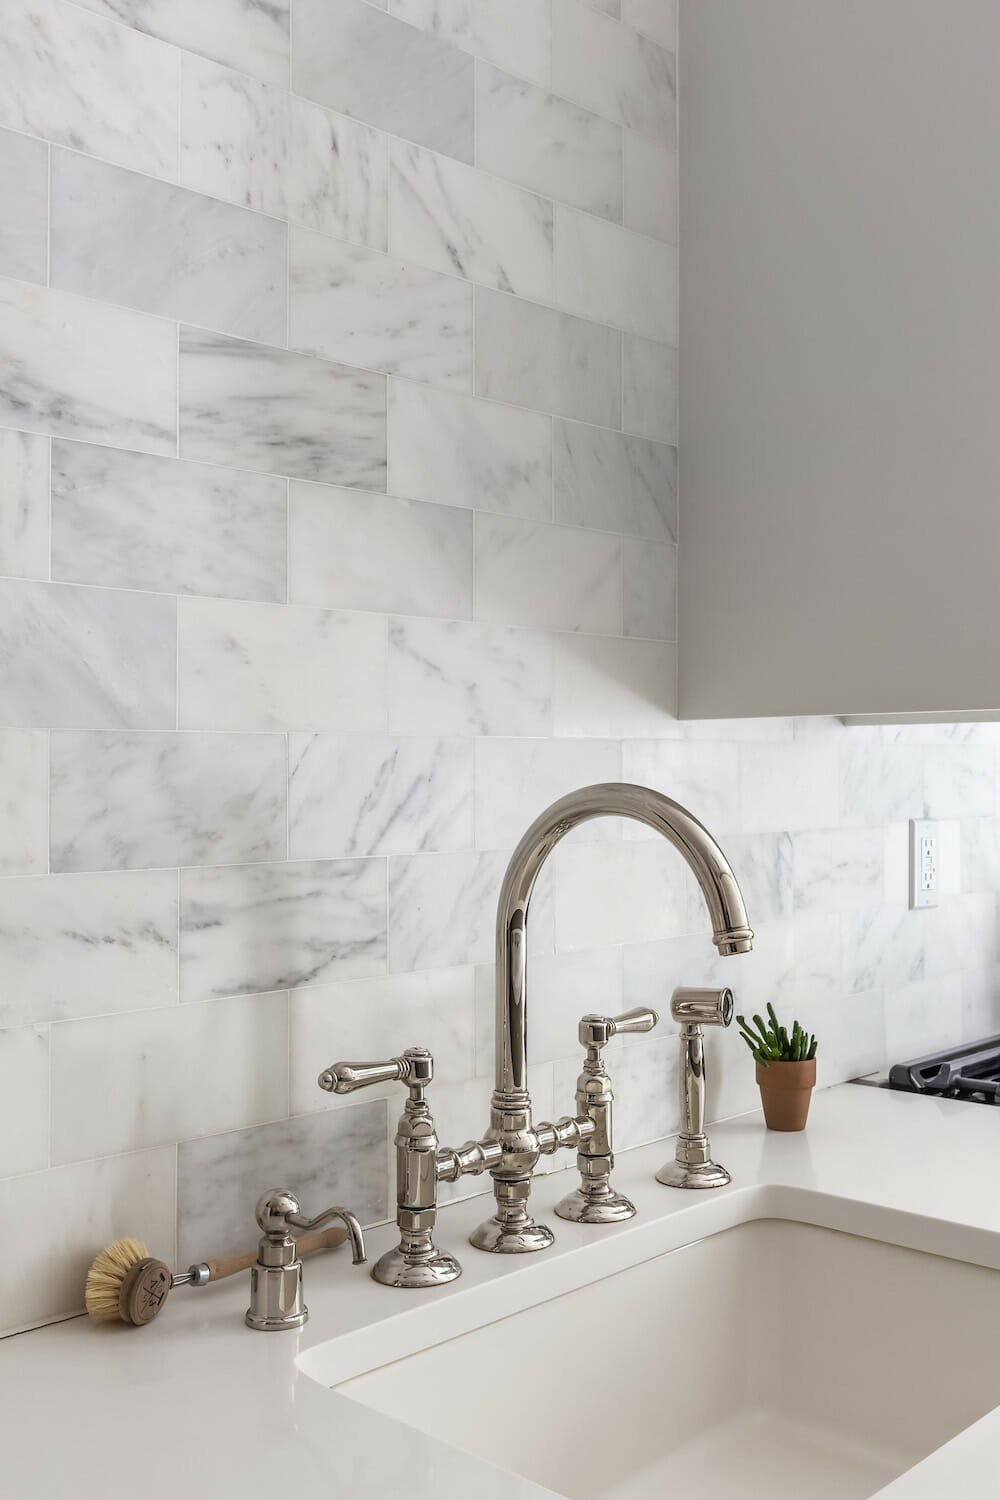 Image of a kitchen sink with Carrara marble backsplash